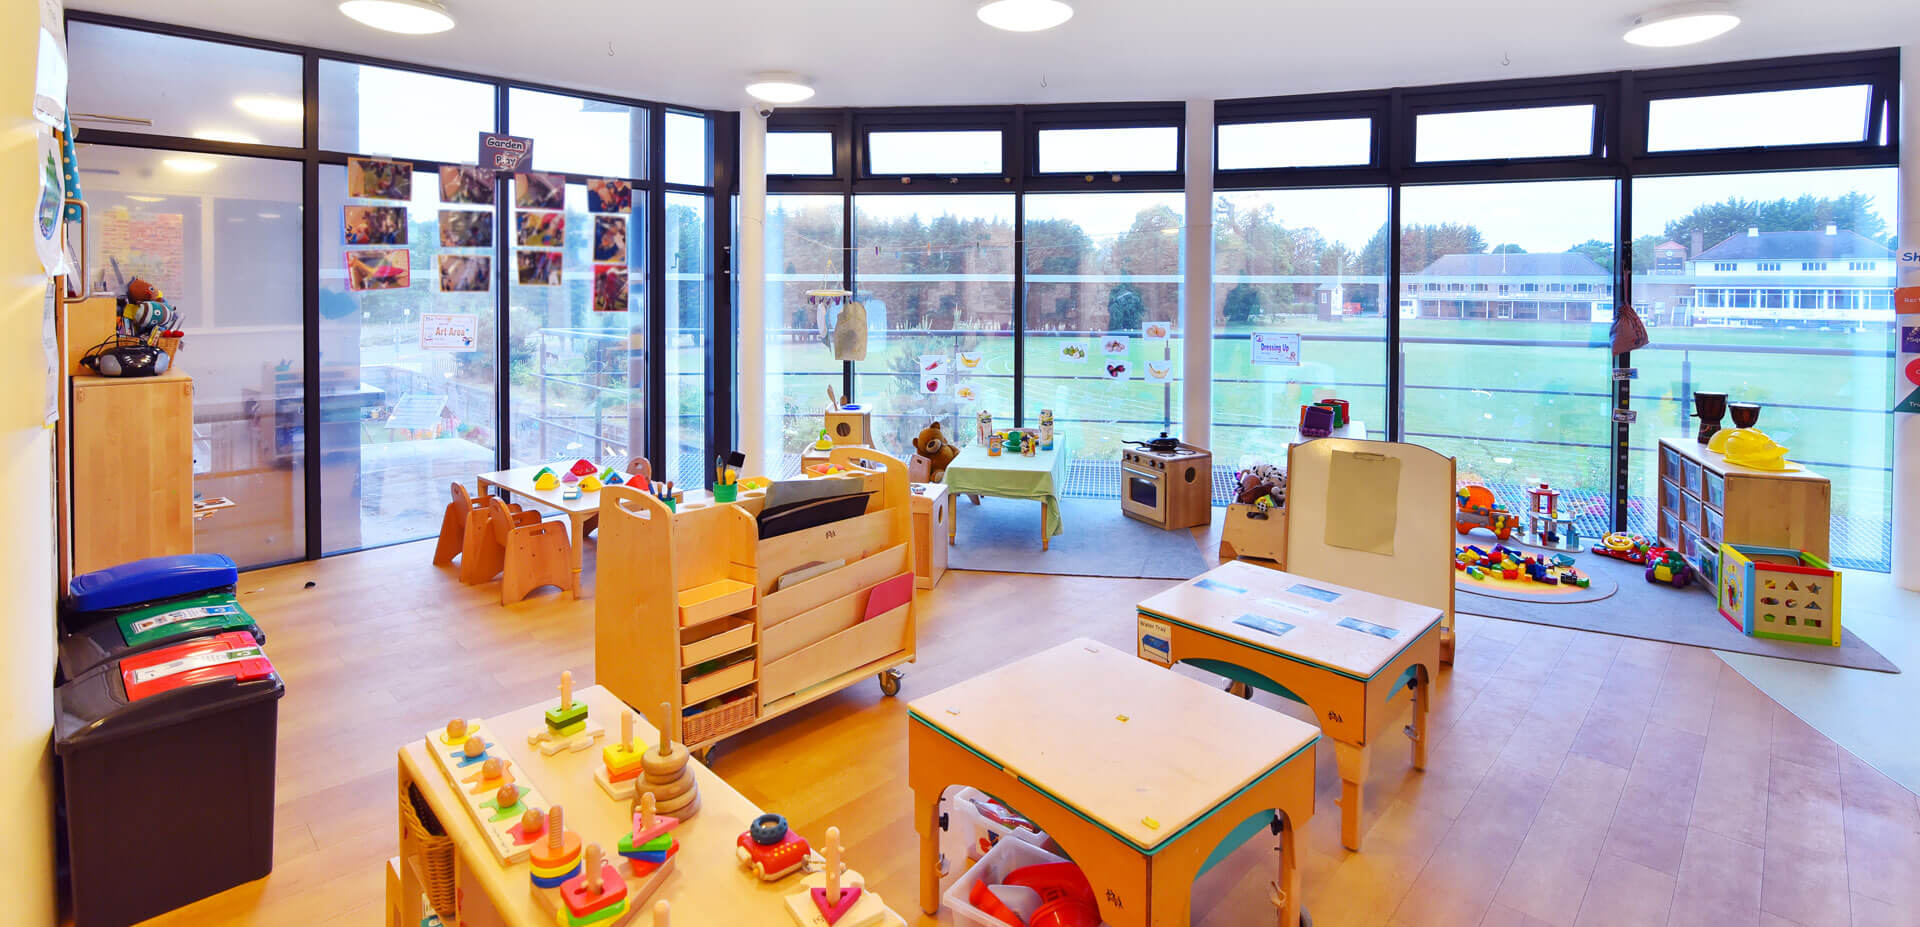 Bright Horizons Chiswick Day Nursery and Preschool